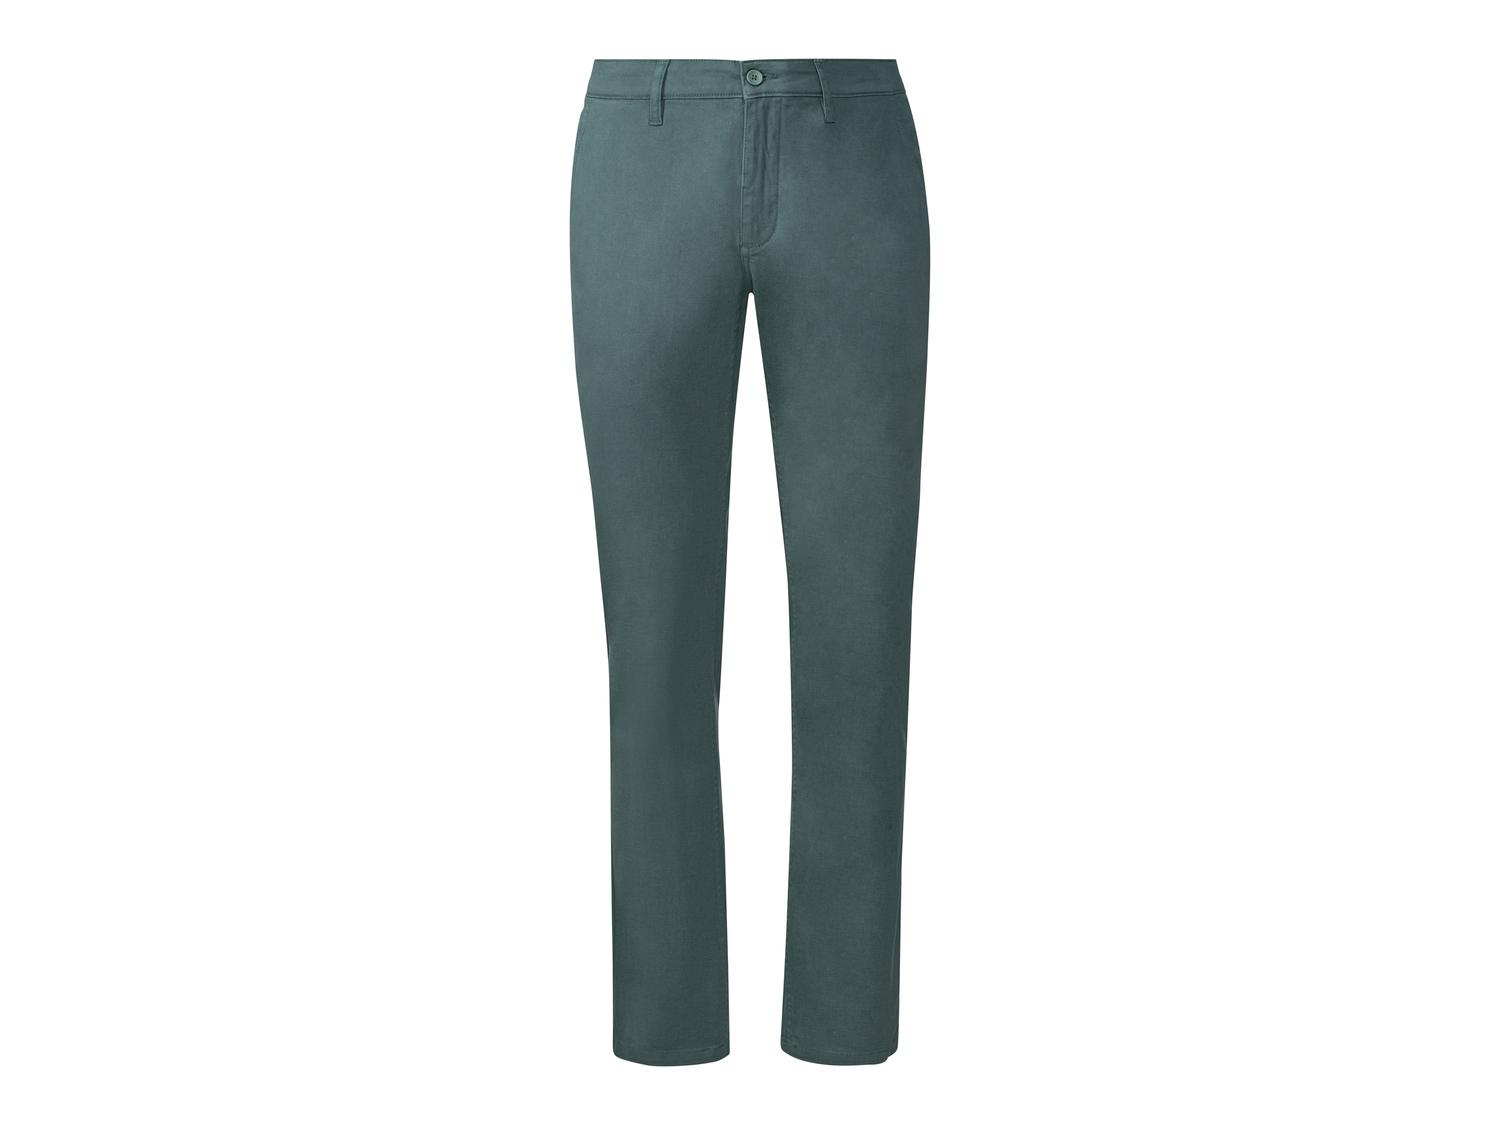 Pantaloni Slim Fit da uomo Livergy, prezzo 9.99 &#8364; 
Misure: 46-56 
- 
Produzione ...